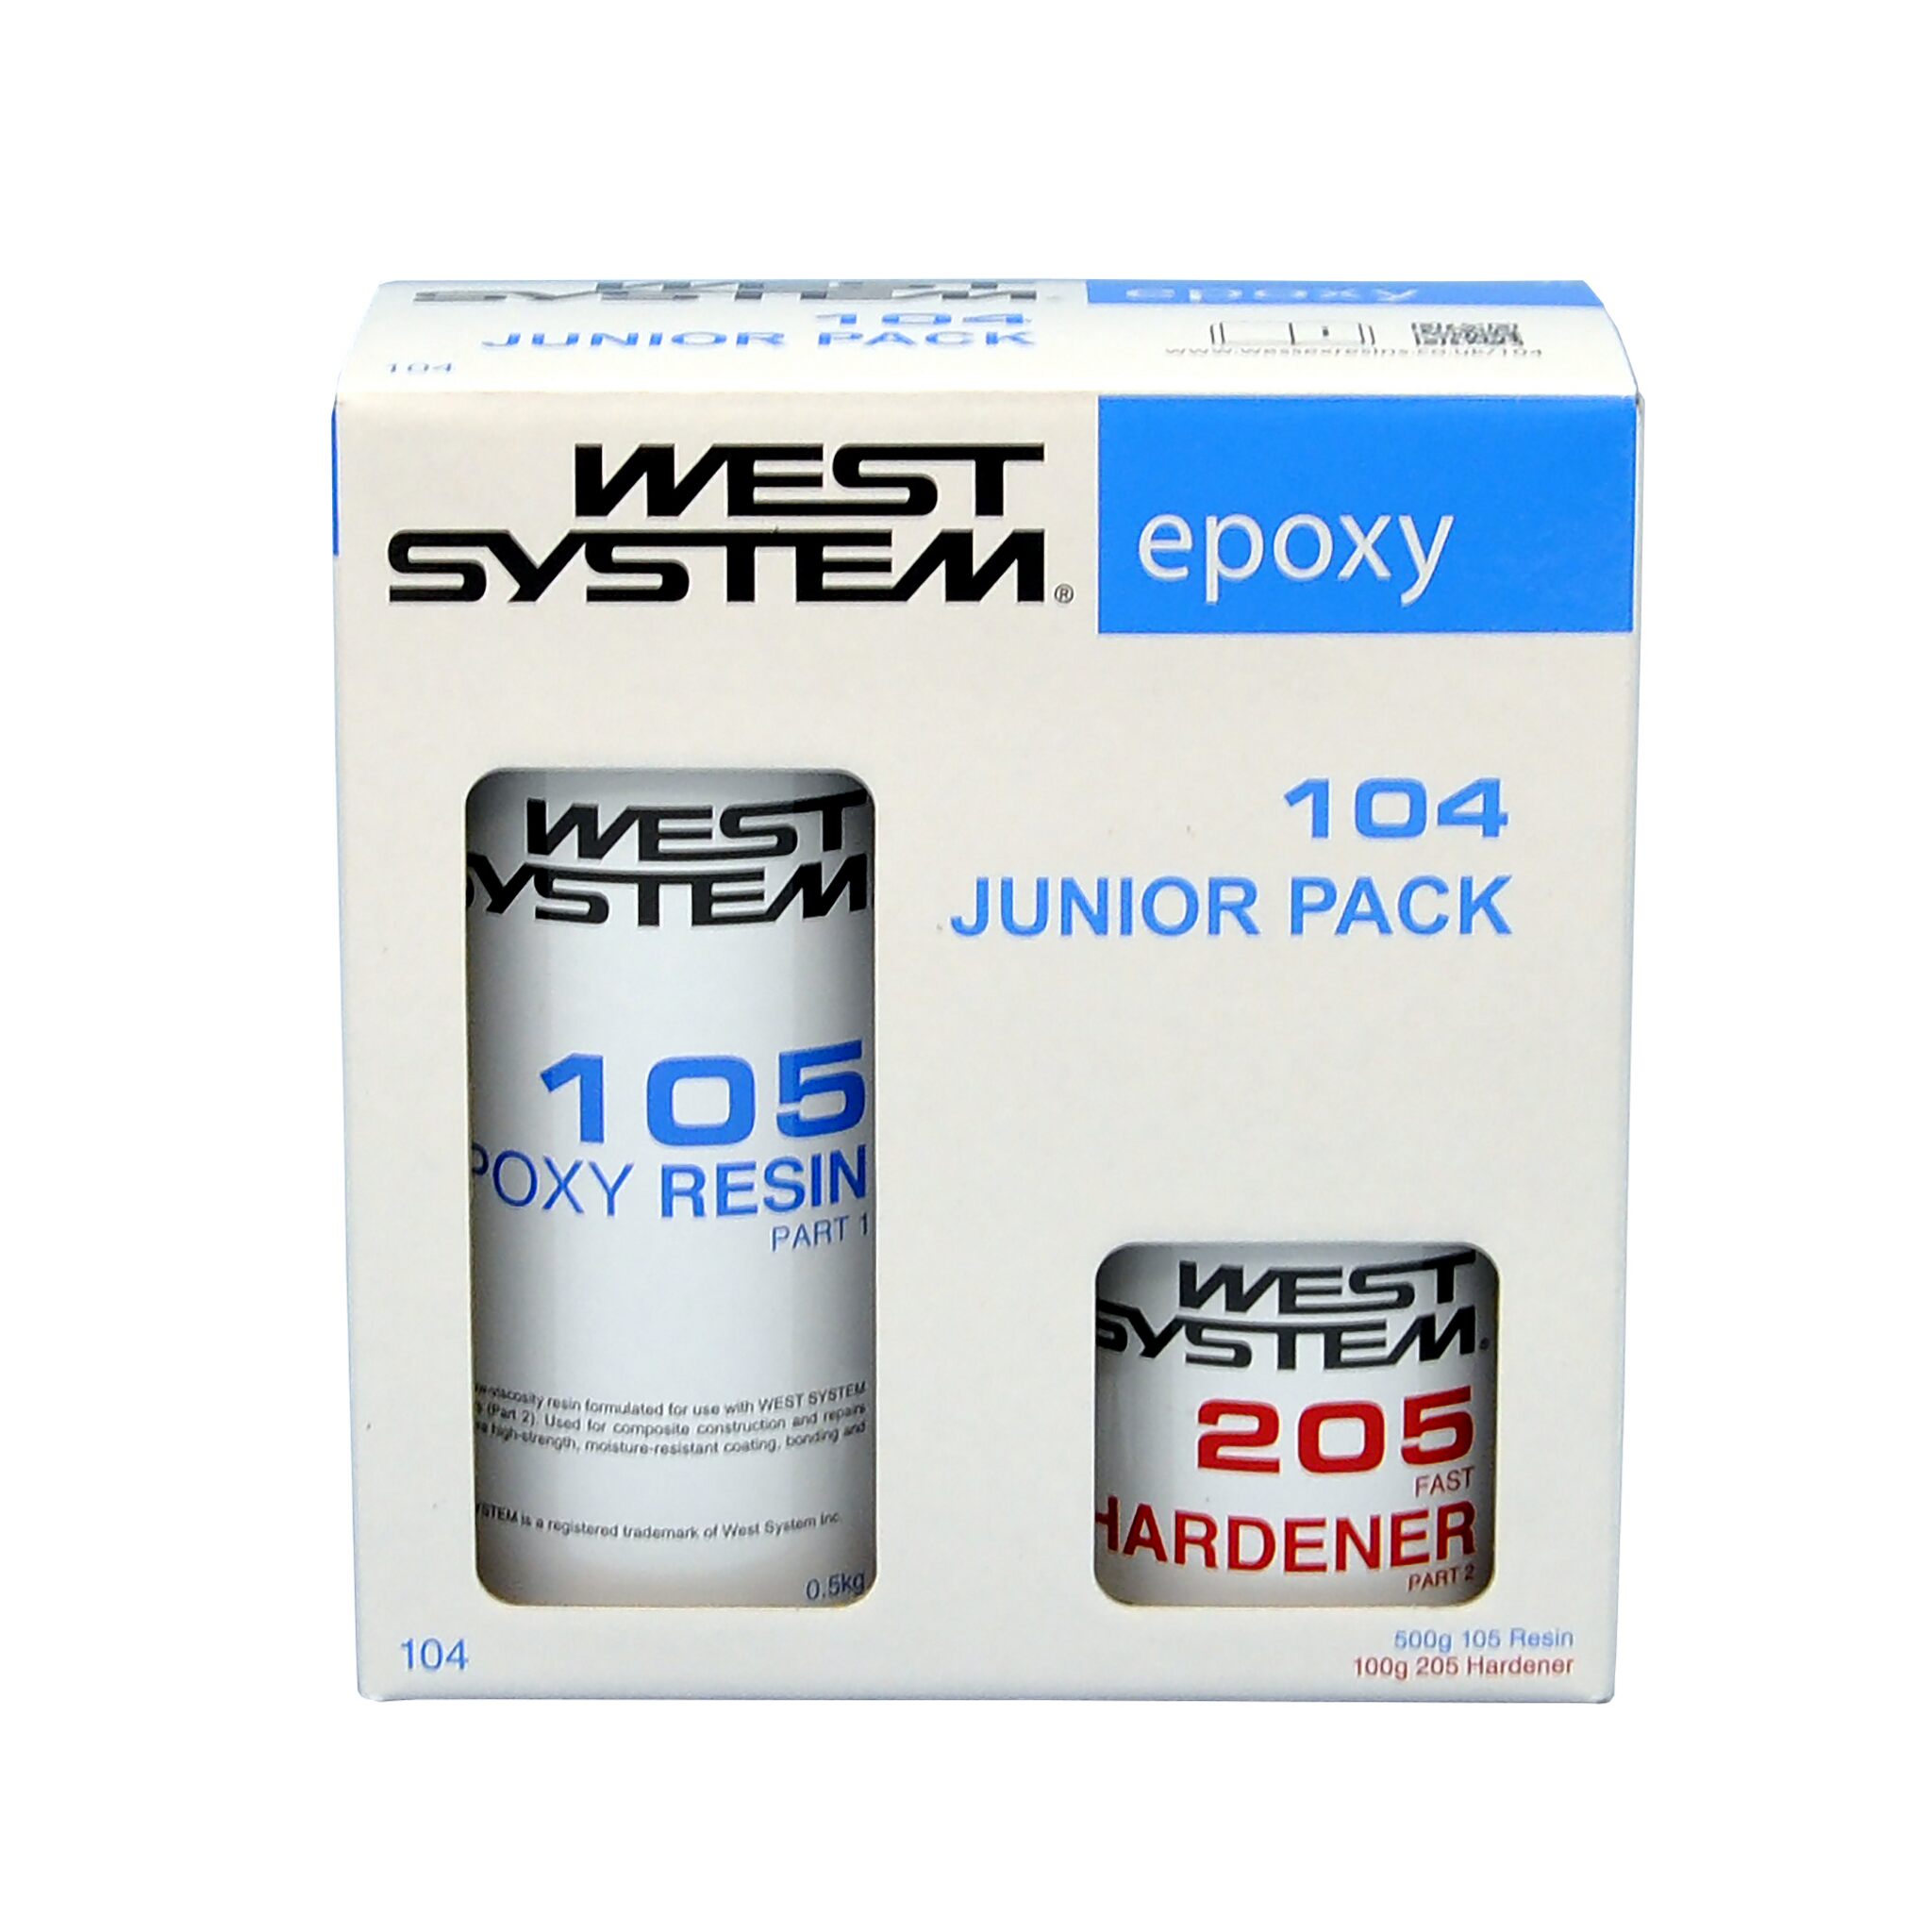 West System Junior Pack Epoxy Resin 105/Hardener 206